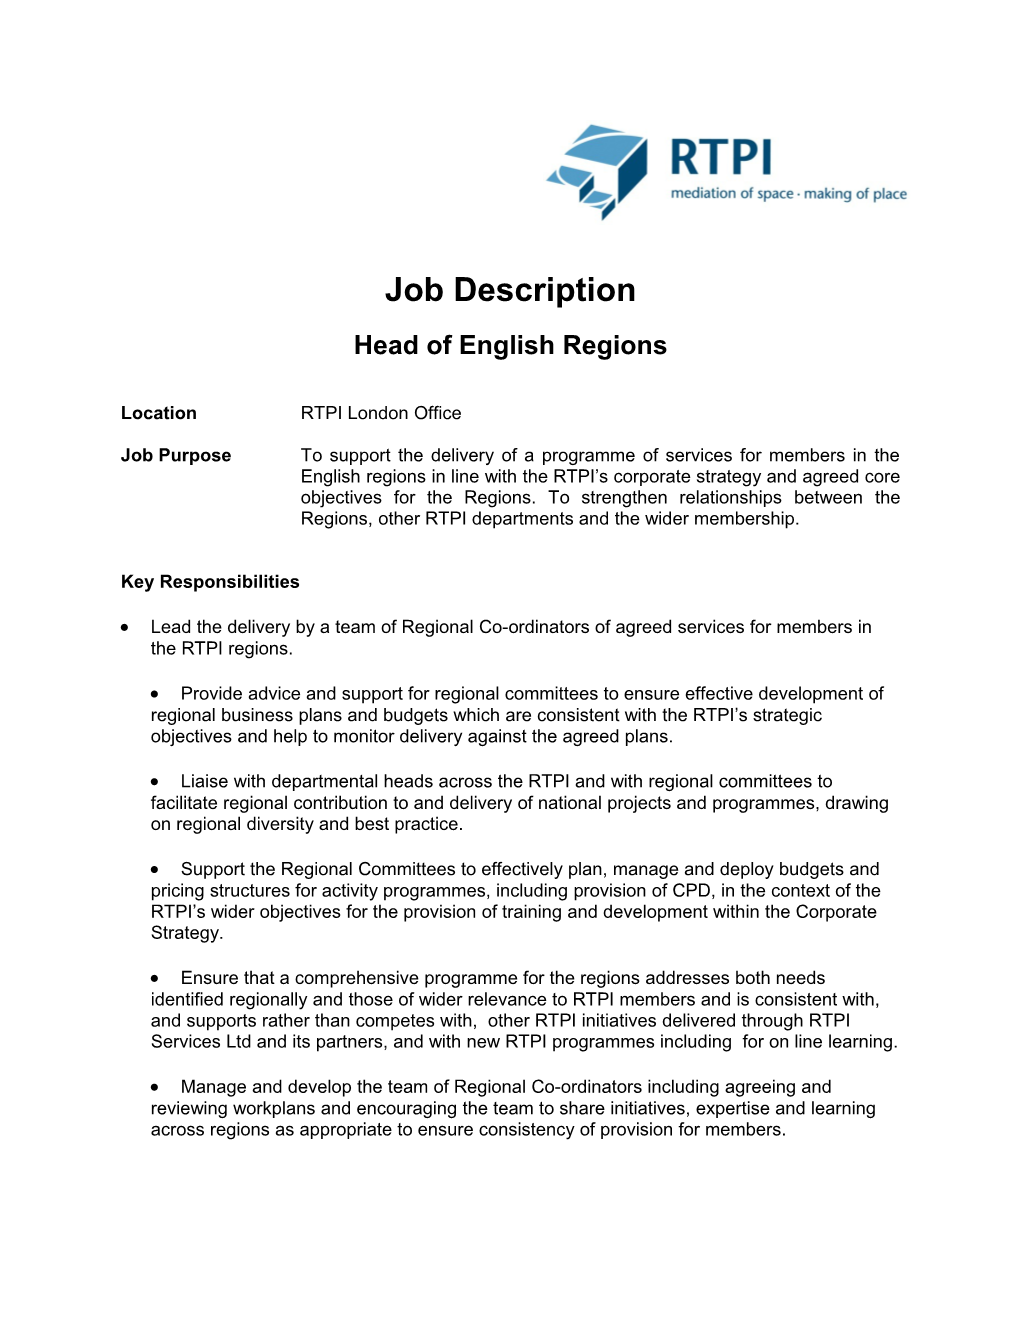 Draft Job Description (October 2005)